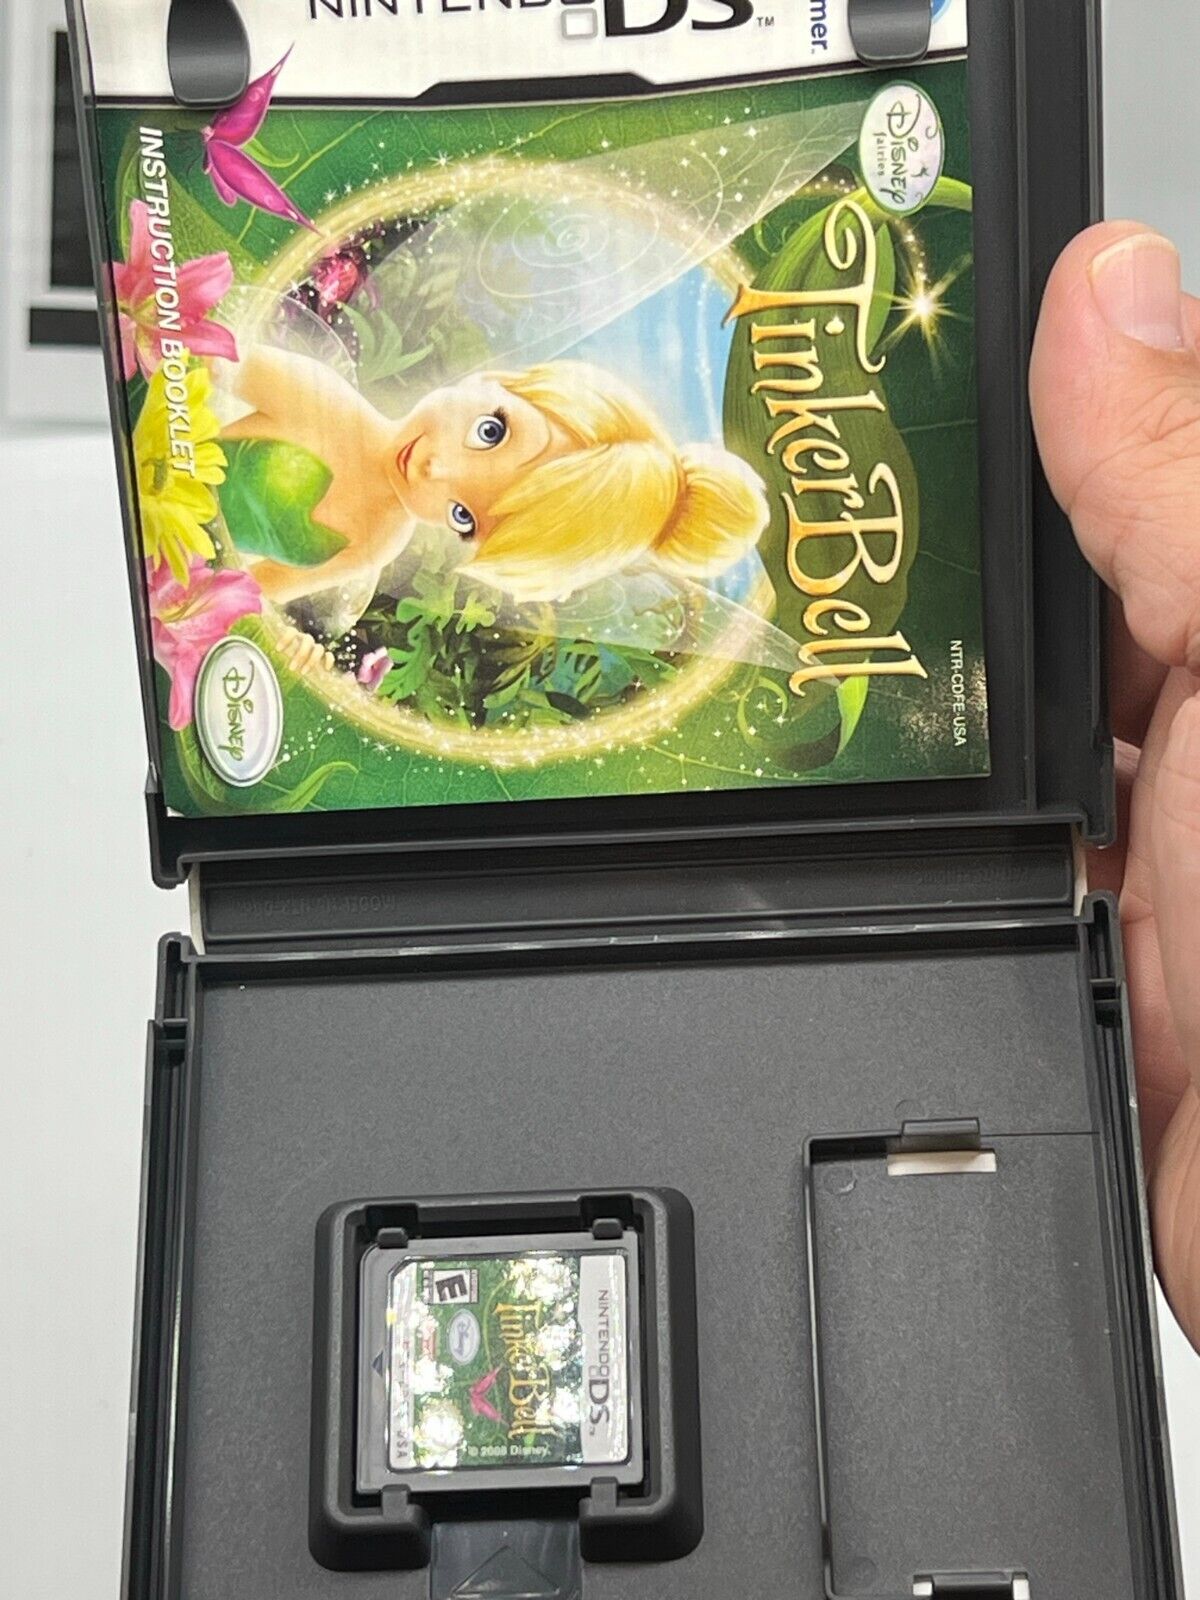 Disney Fairies: Tinker Bell (Nintendo DS, 2008) - Tested